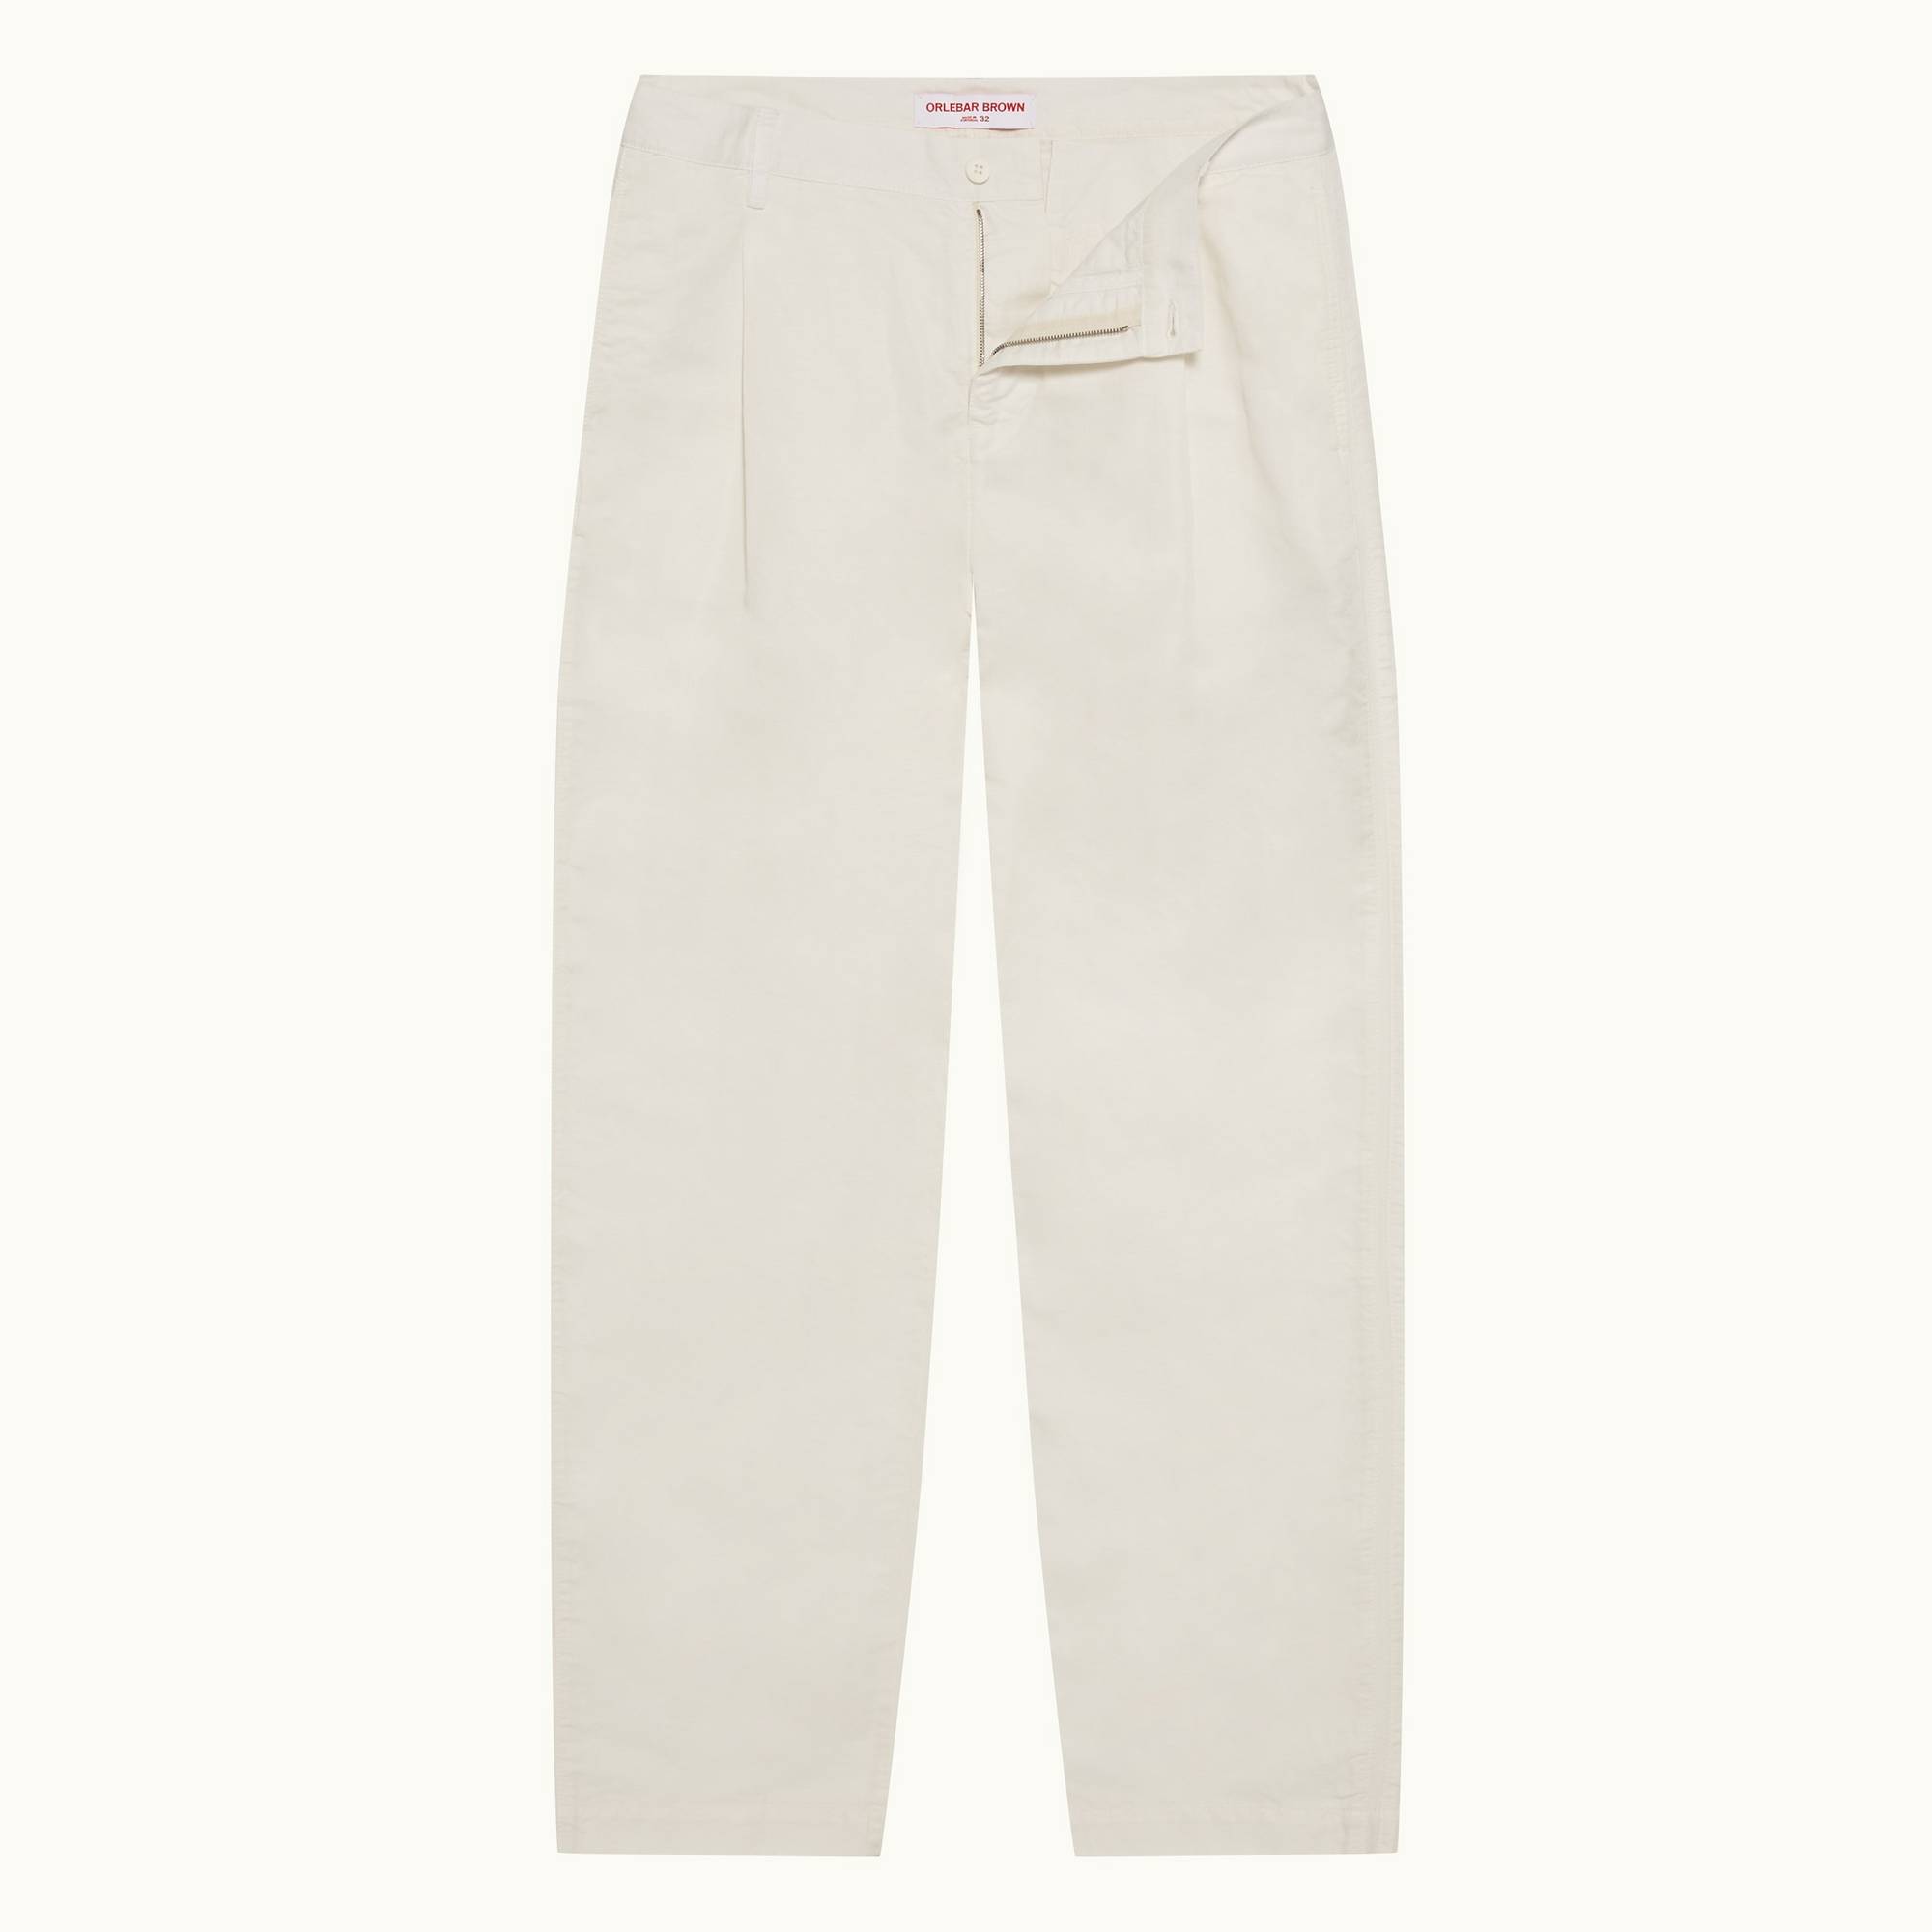 Dunmore - Mens White Sand Cotton-Linen Trousers